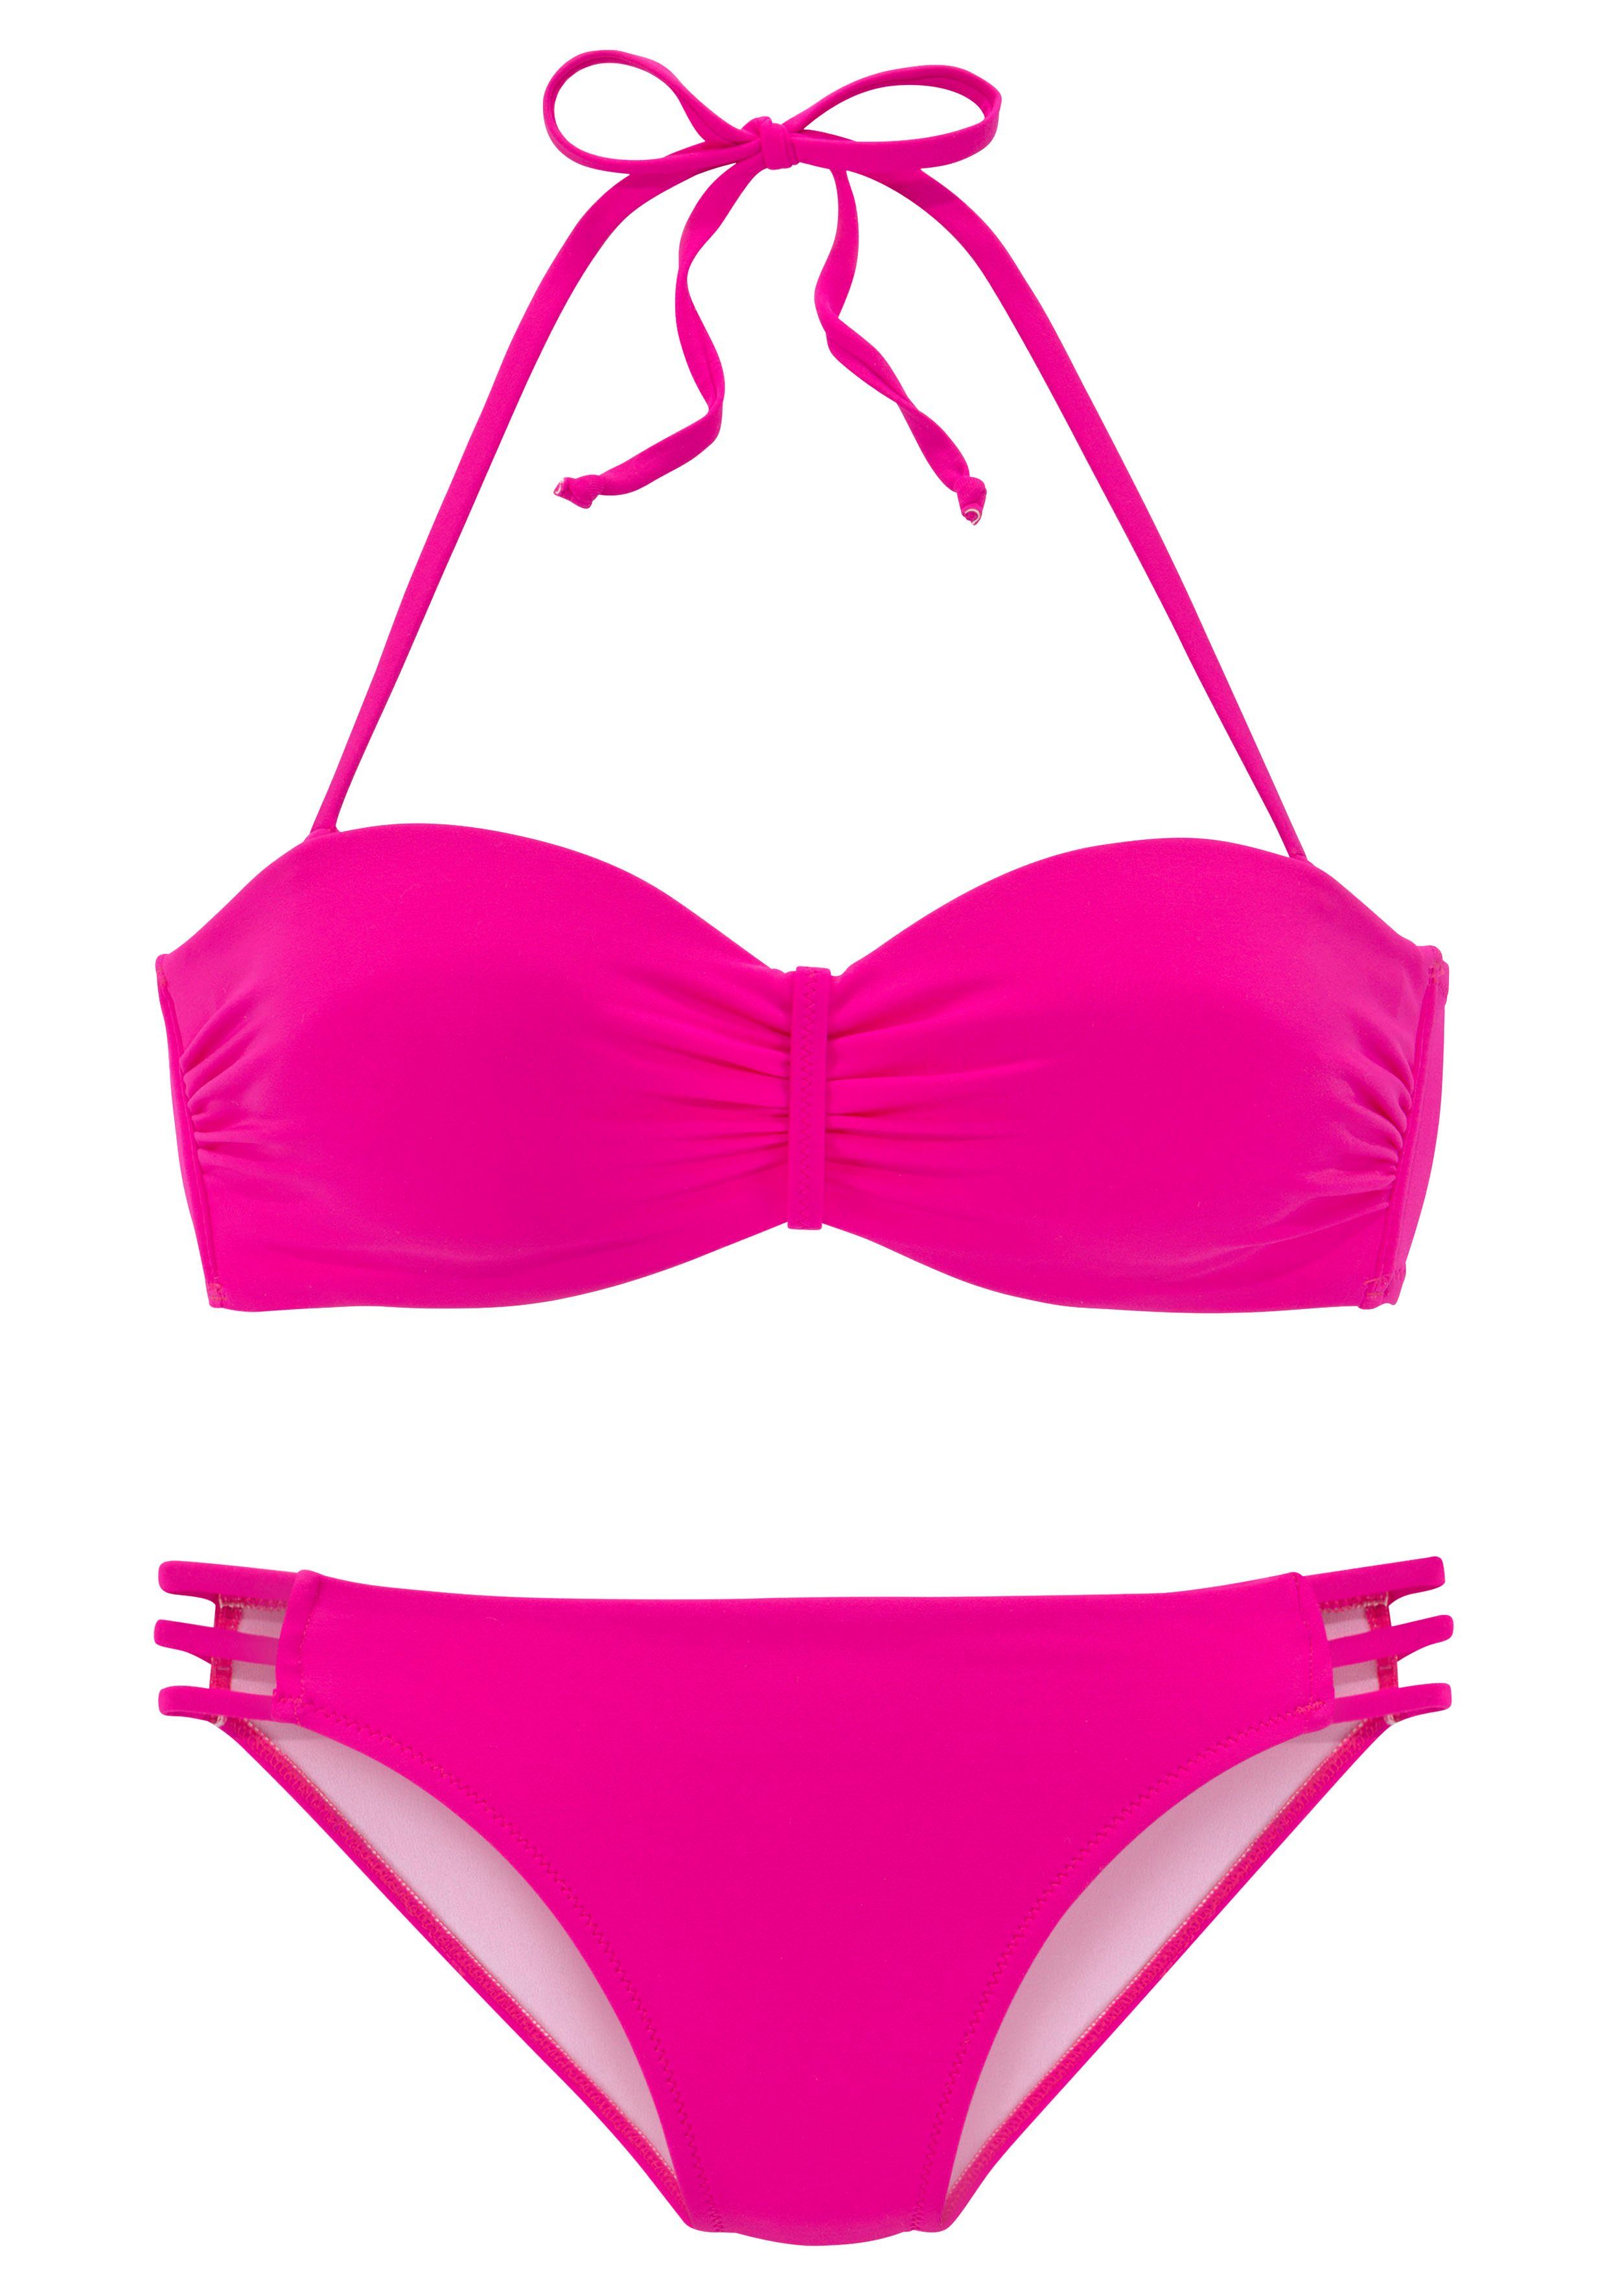 Vivance Bügel-Bandeau-Bikini in trendiger Unifarbe pink